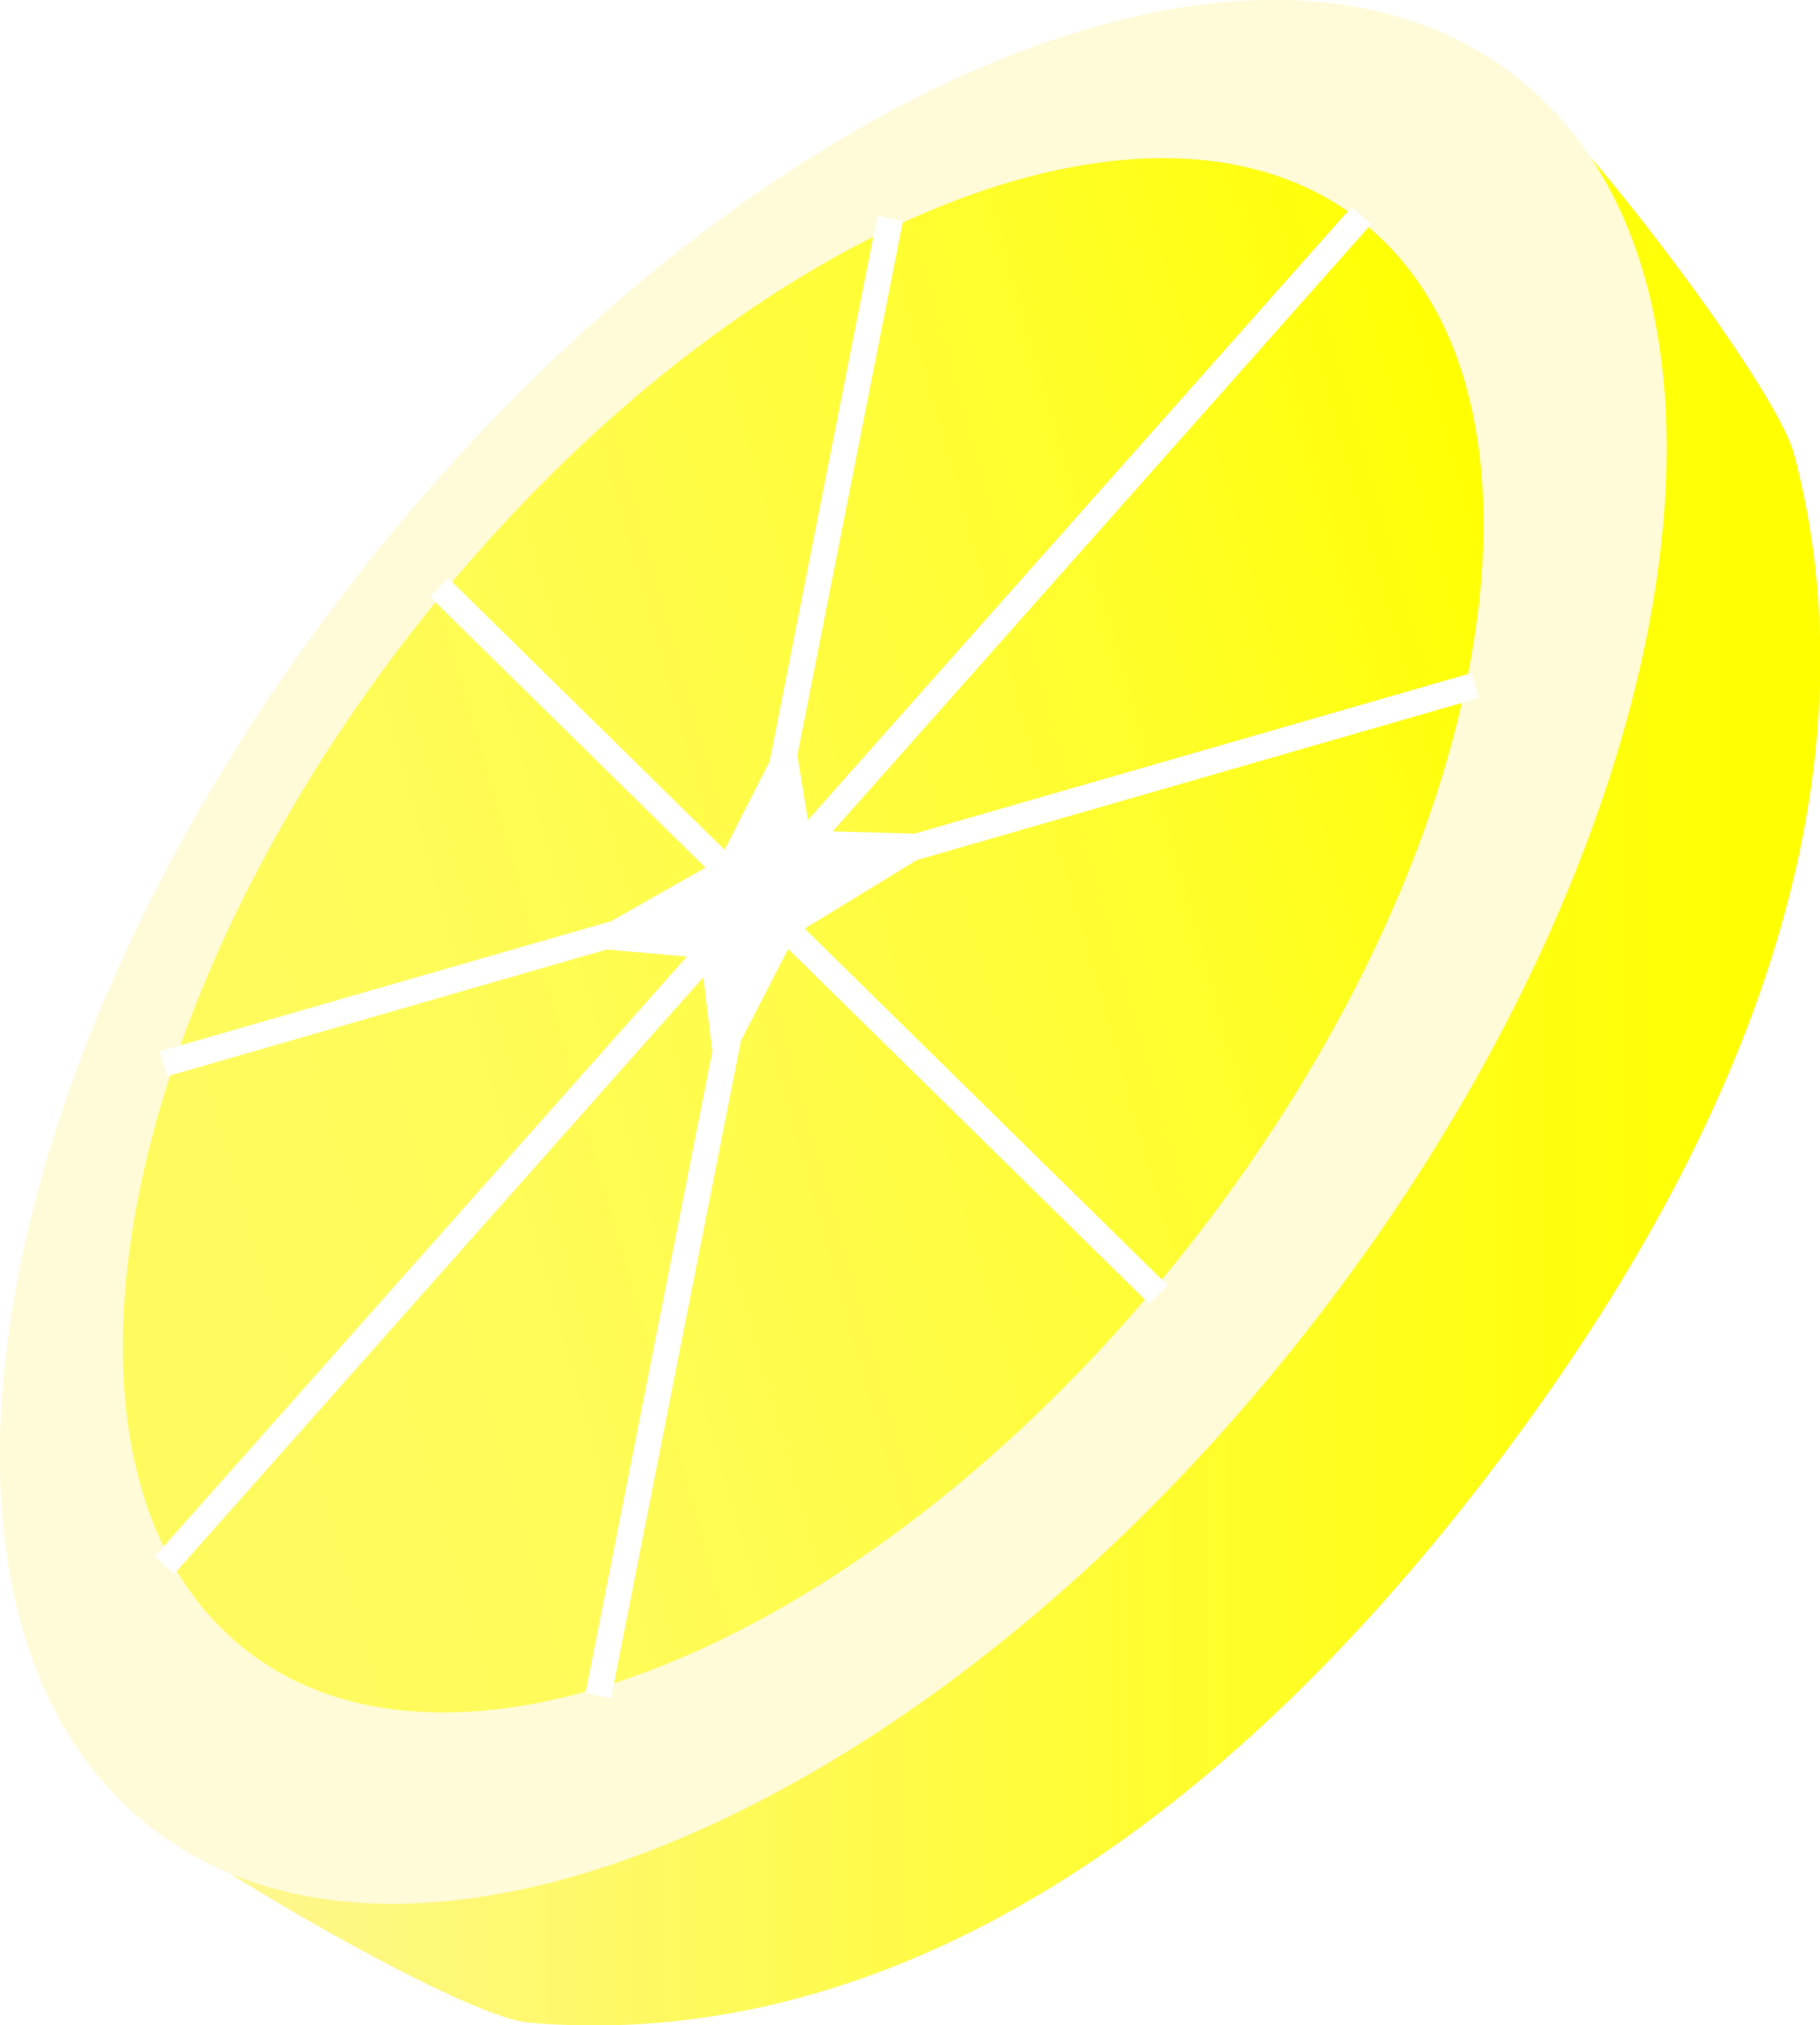 Lemons clipart yellow object. Round lemon slice free